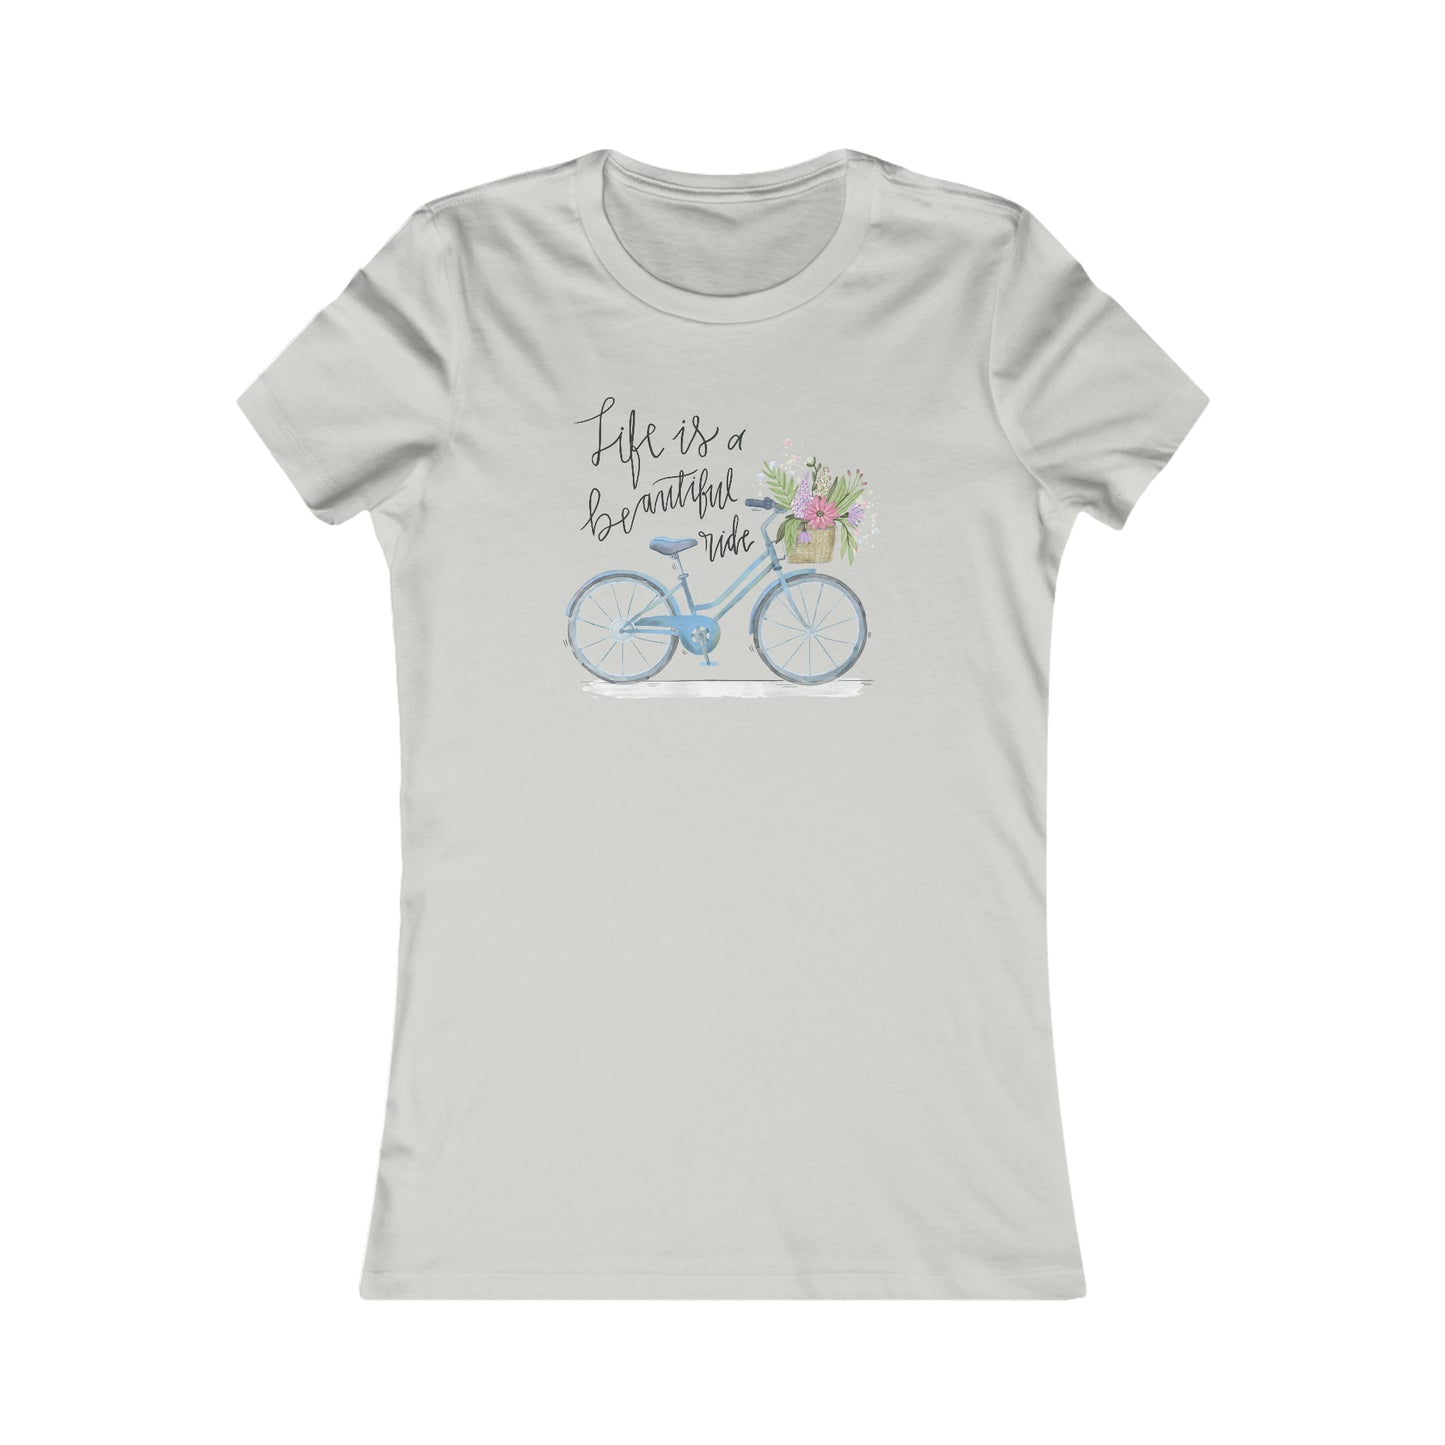 Bicycle T-Shirt For Beautiful Ride TShirt For Girl T Shirt For Woman Shirt For Feminine Bike Shirt For Bicycle Gift